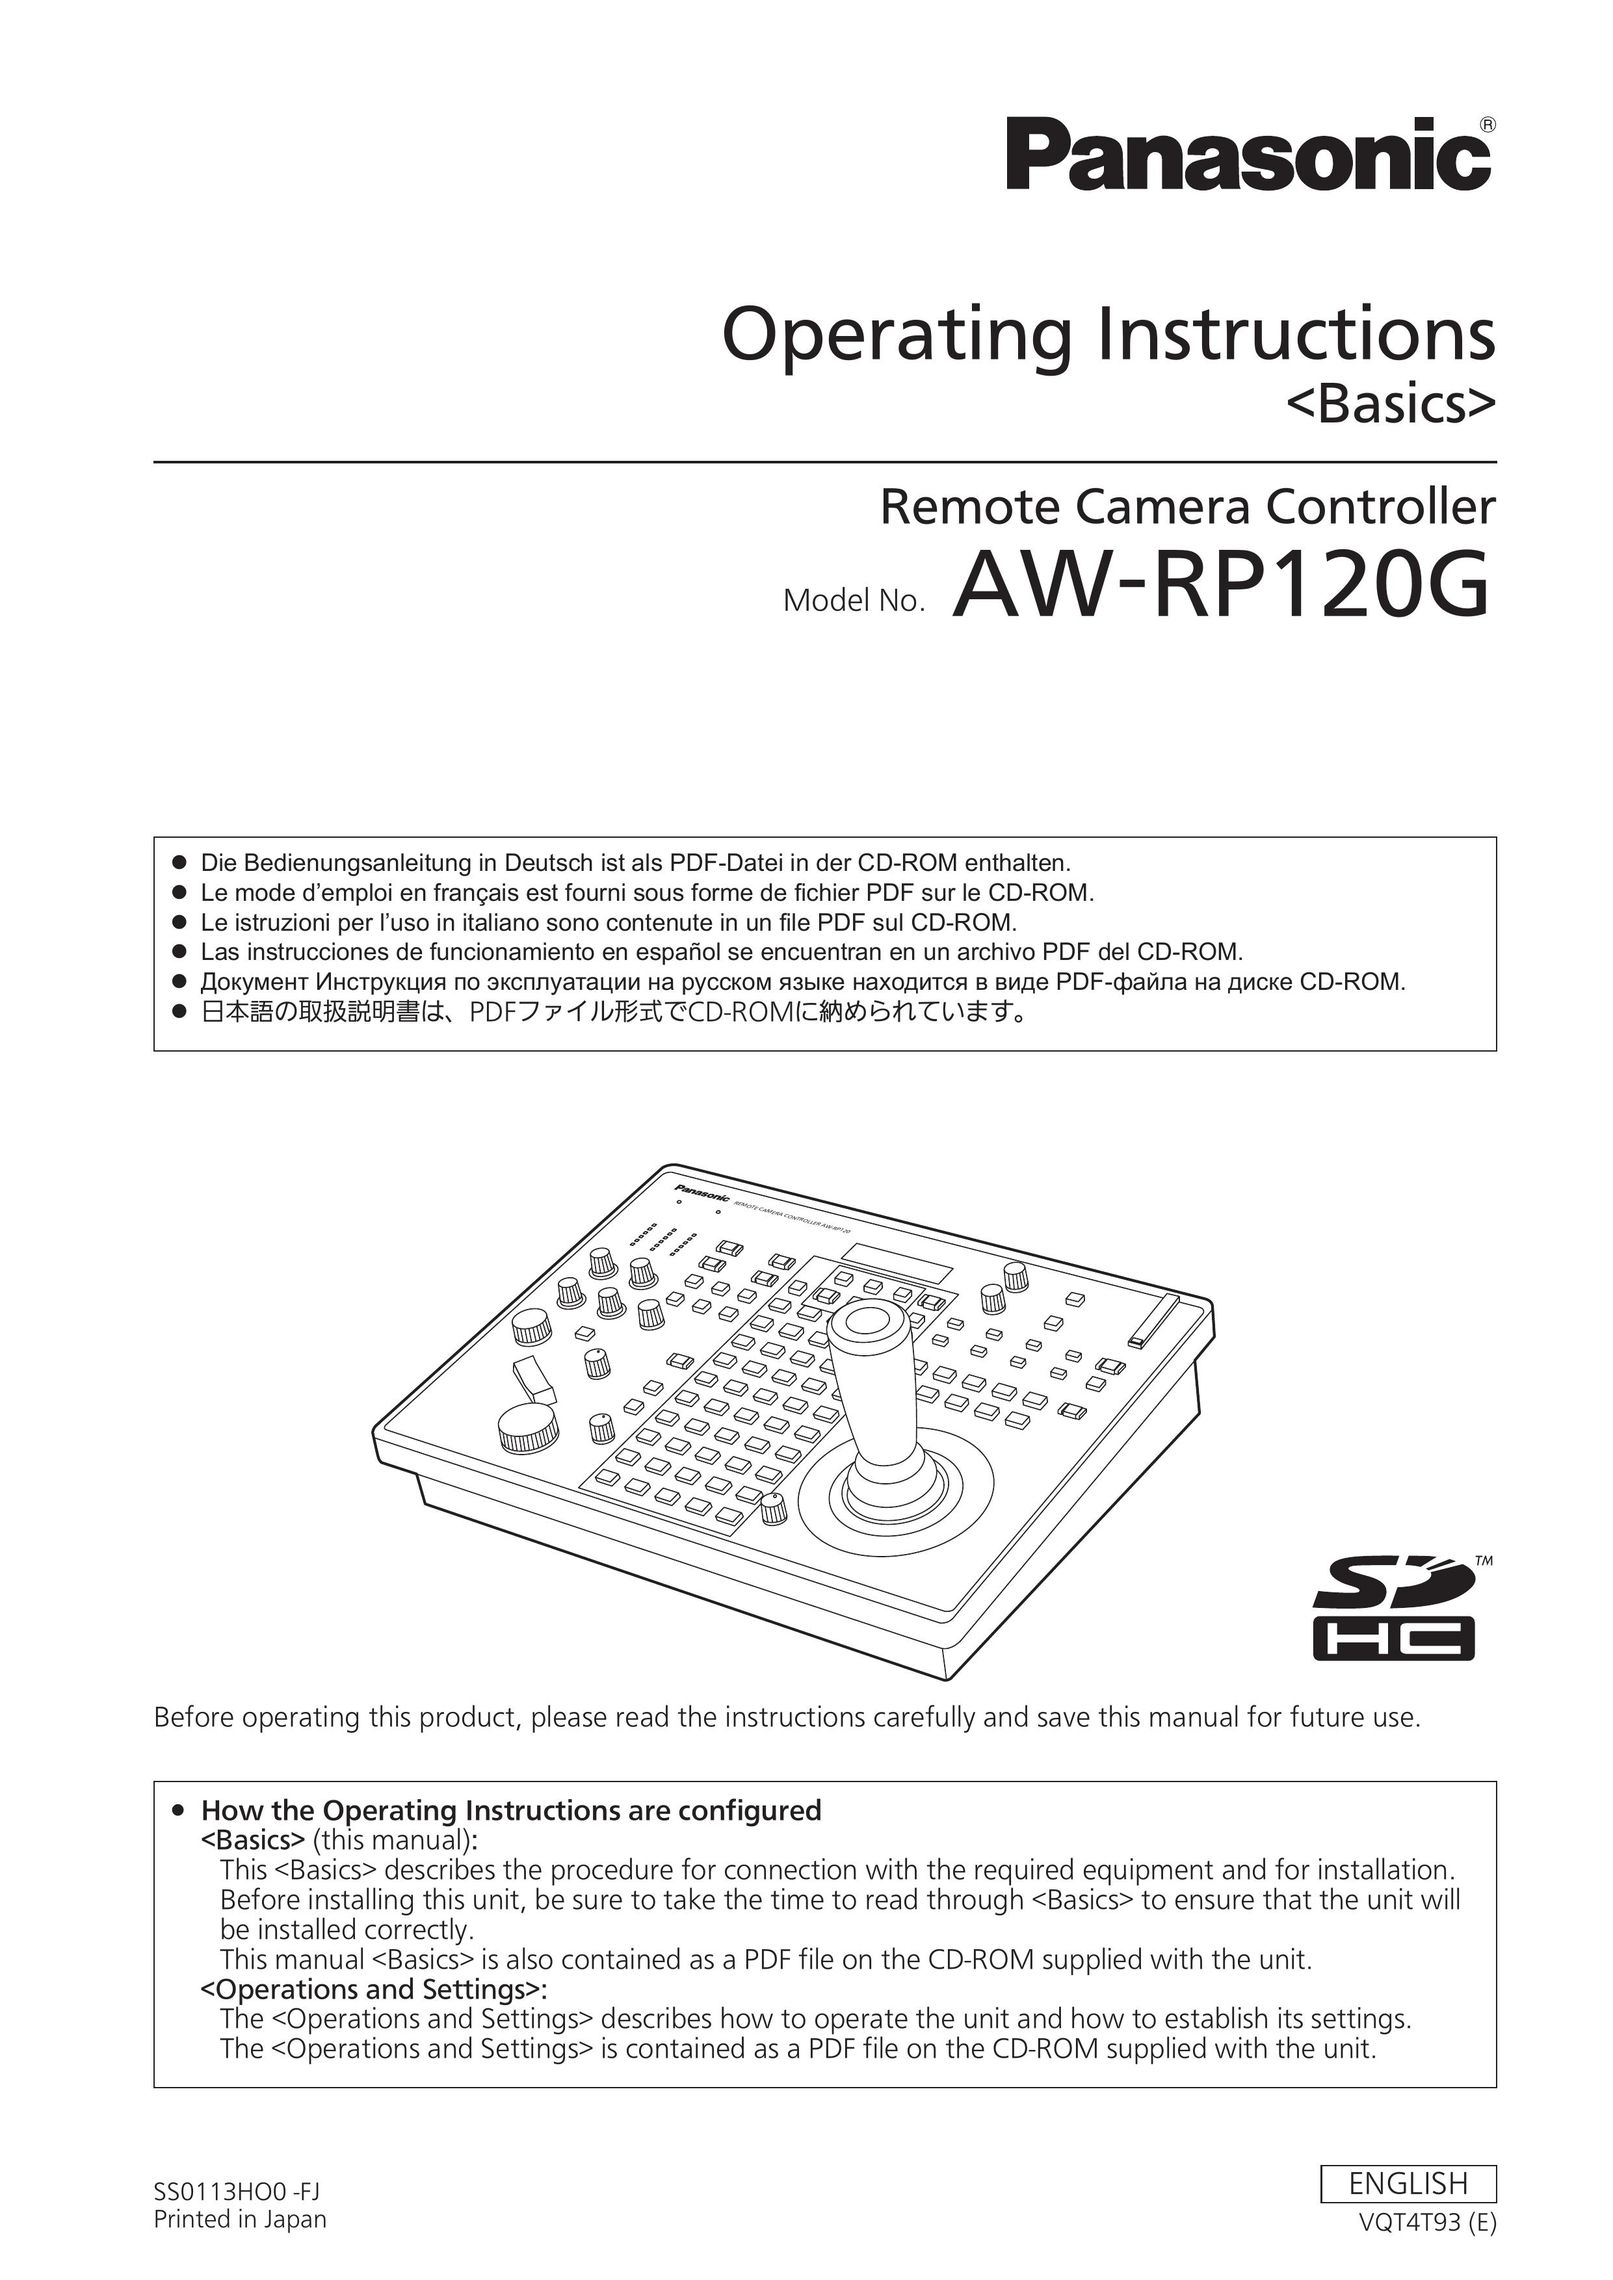 Panasonic AW-RP120G Video Game Controller User Manual